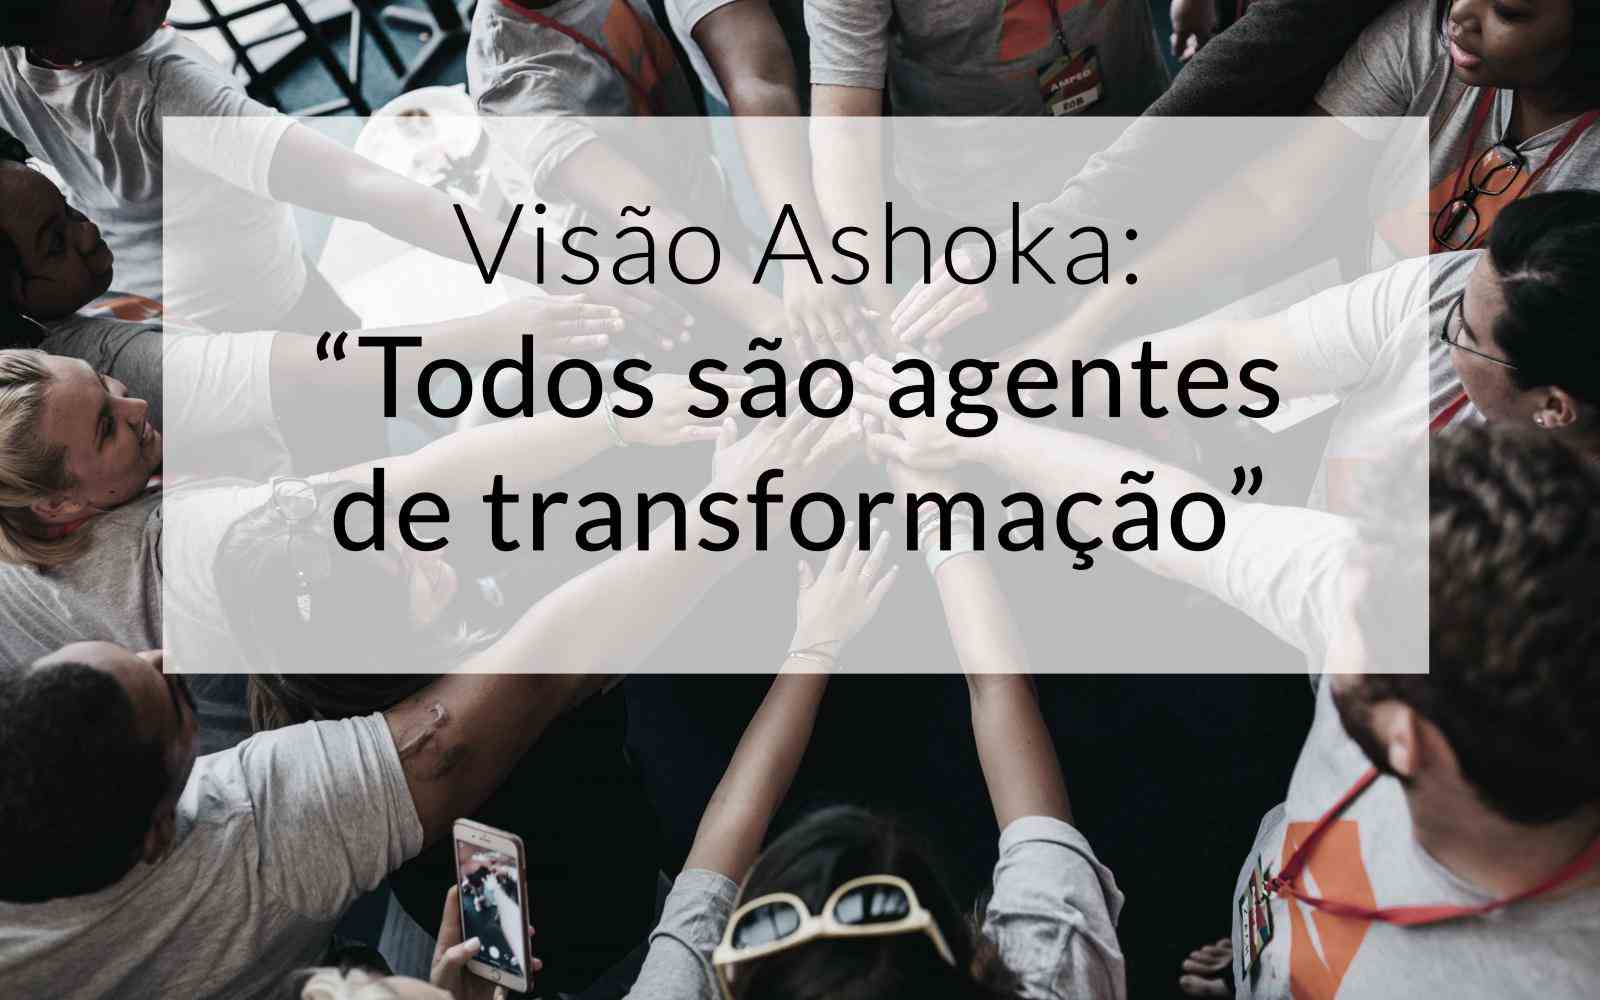 Ashoka Brazil